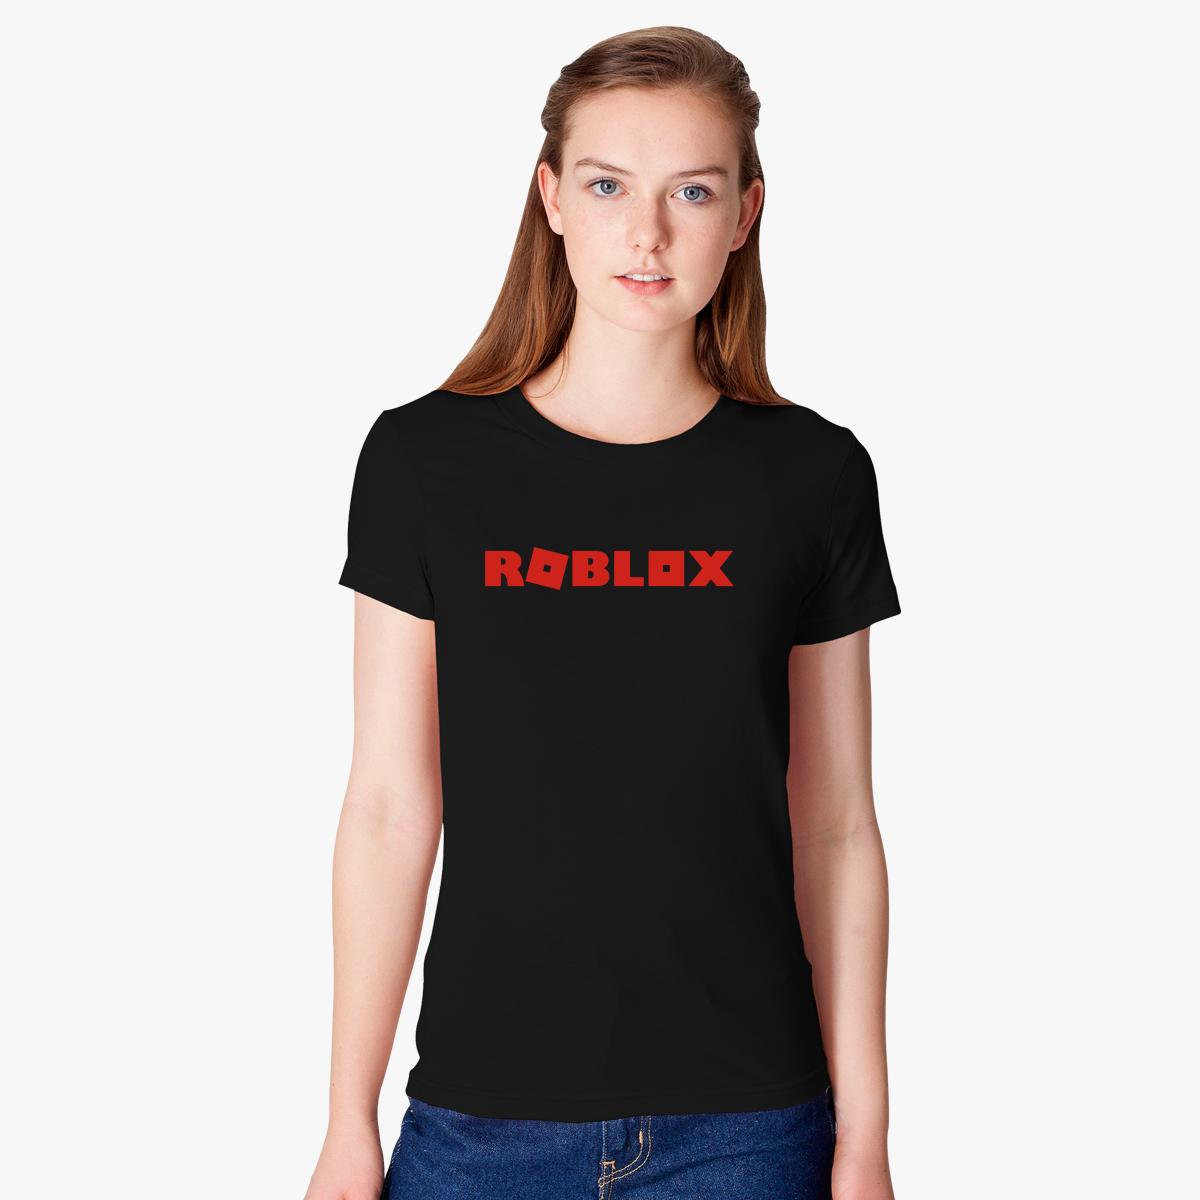 Roblox Clothes Ebay